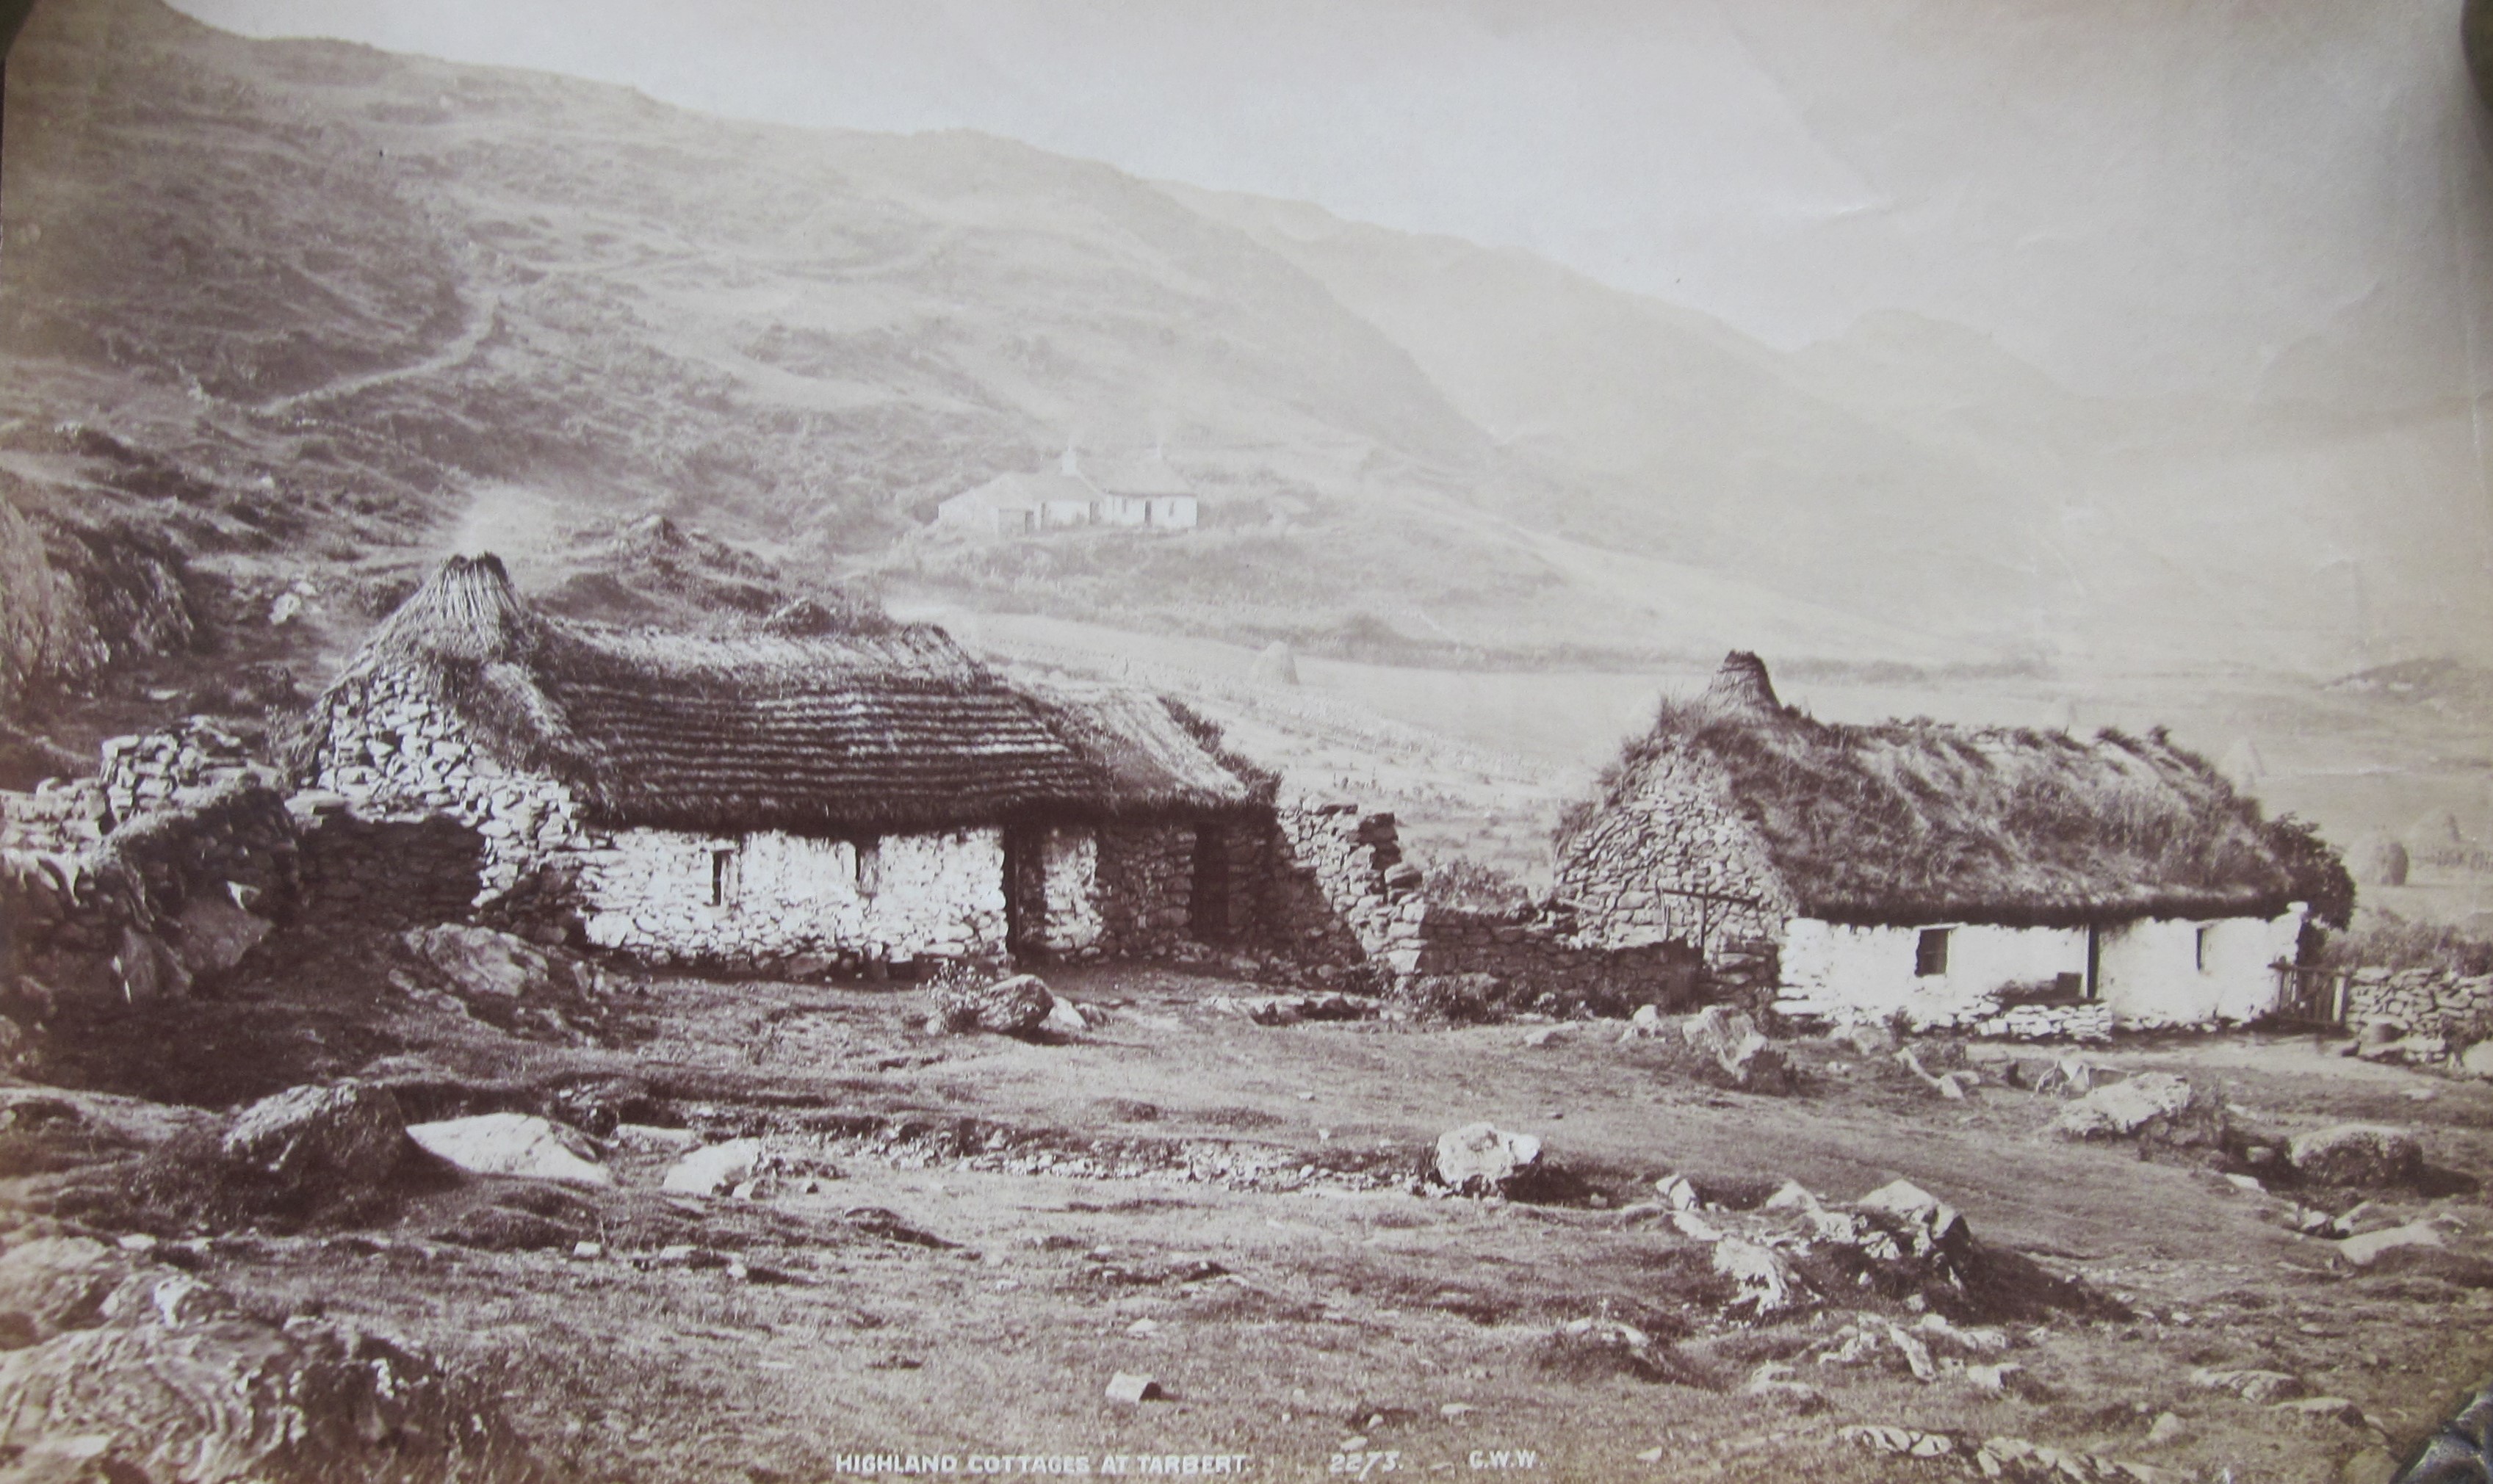 Highland Cottages at Tarbert, GWW